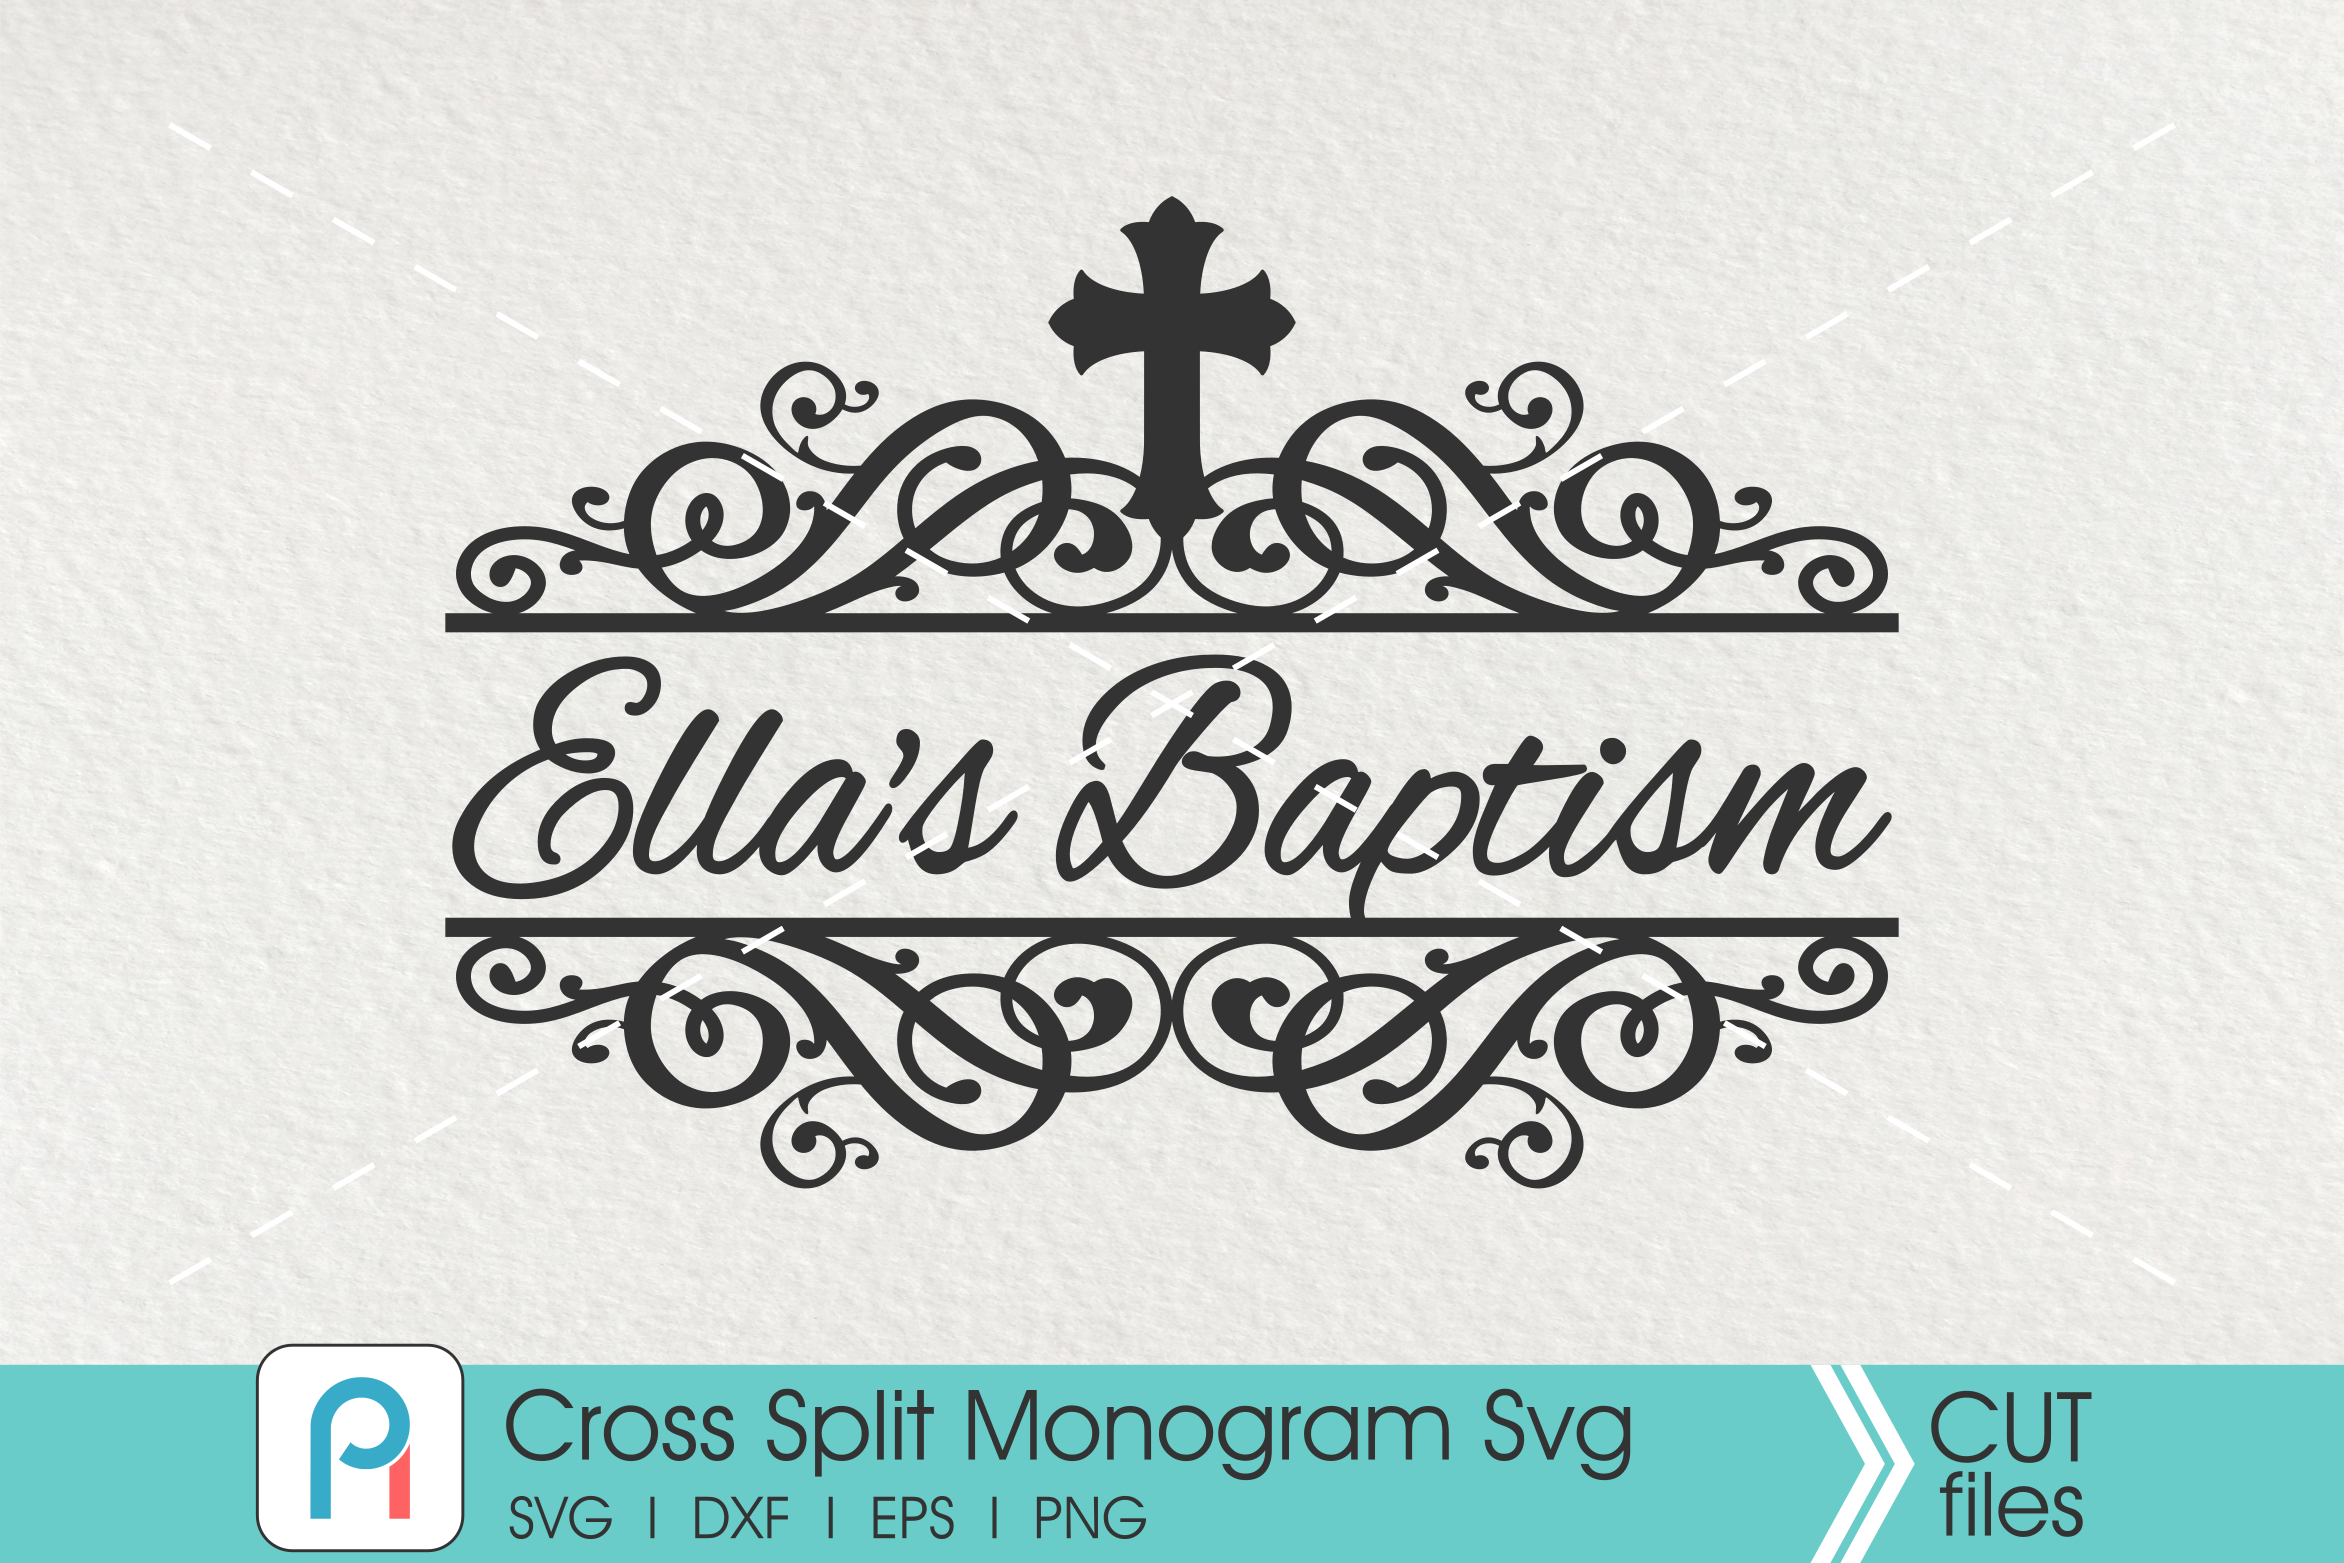 Download Cross Monogram Svg, Cross Split Monogram Svg,Cross Swirl ...